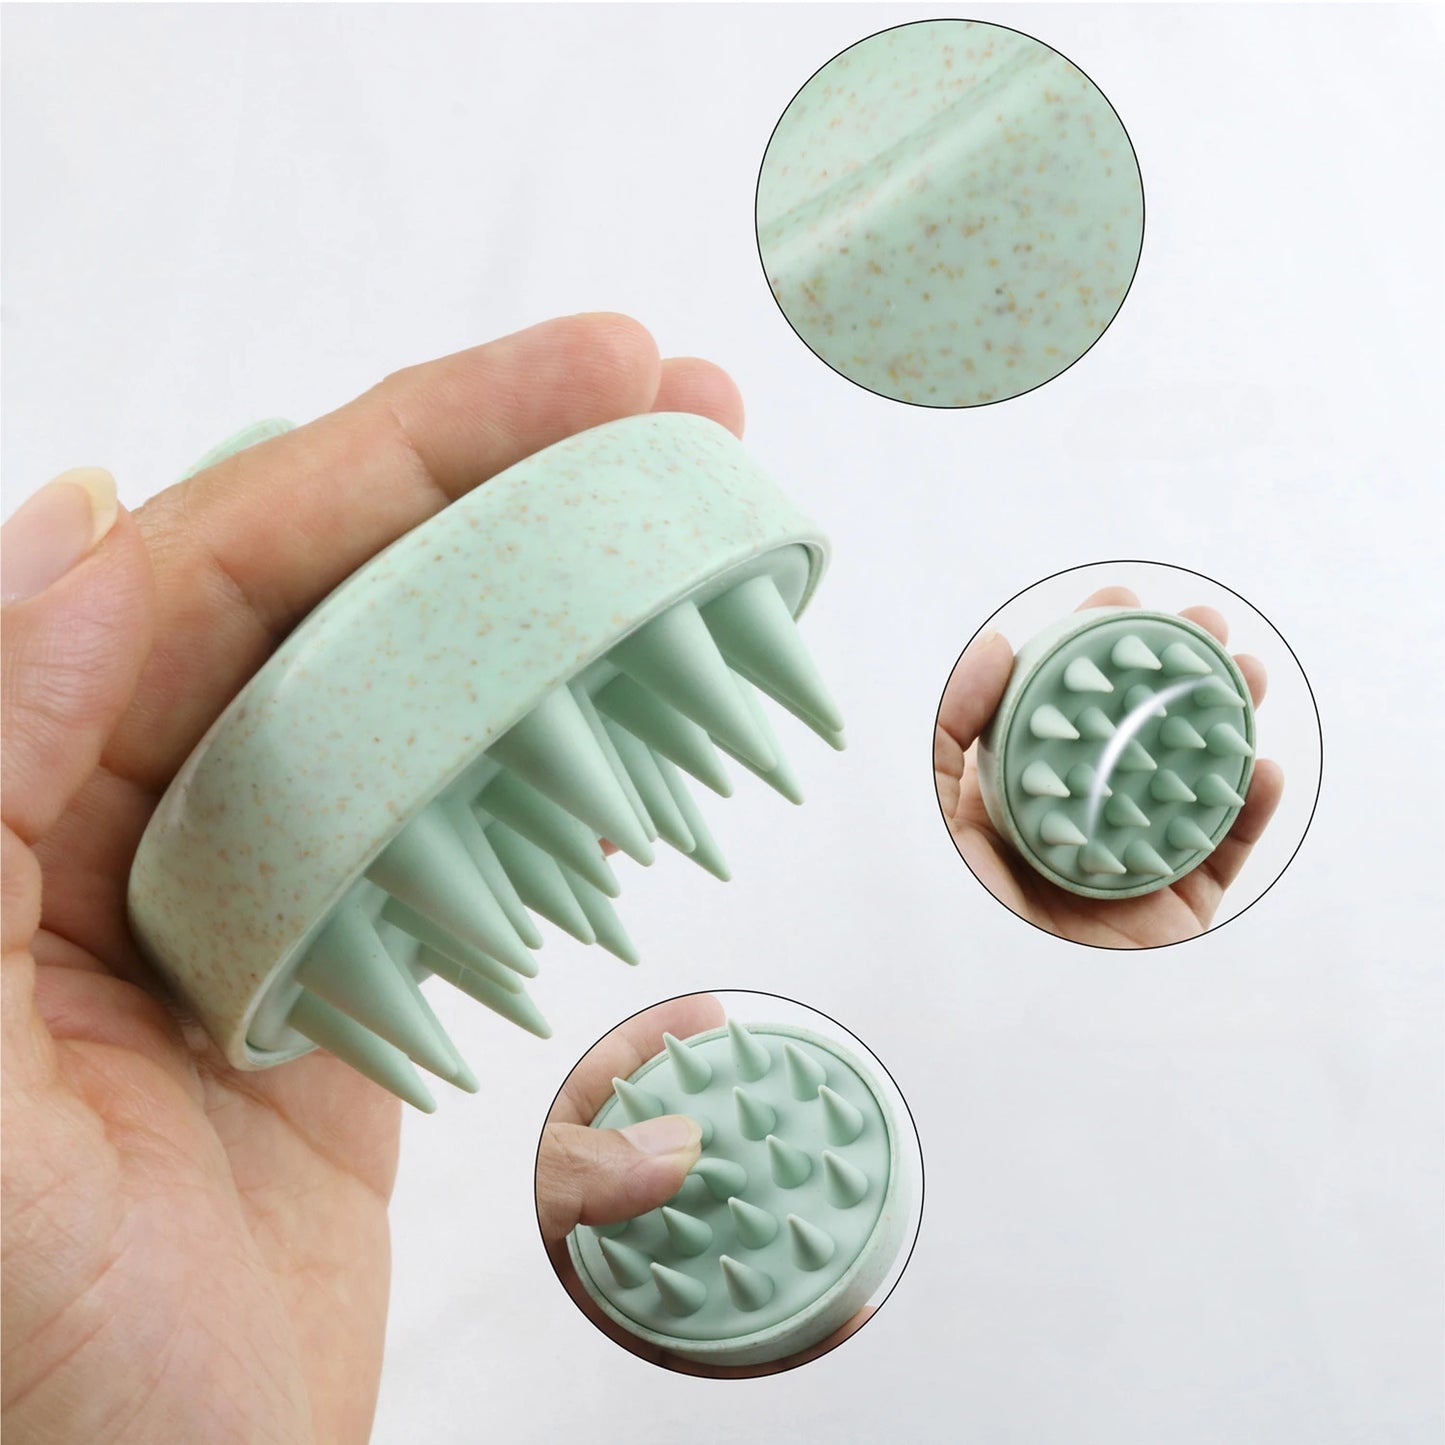 Silicone Shampoo Brush Head Scalp Massage Comb